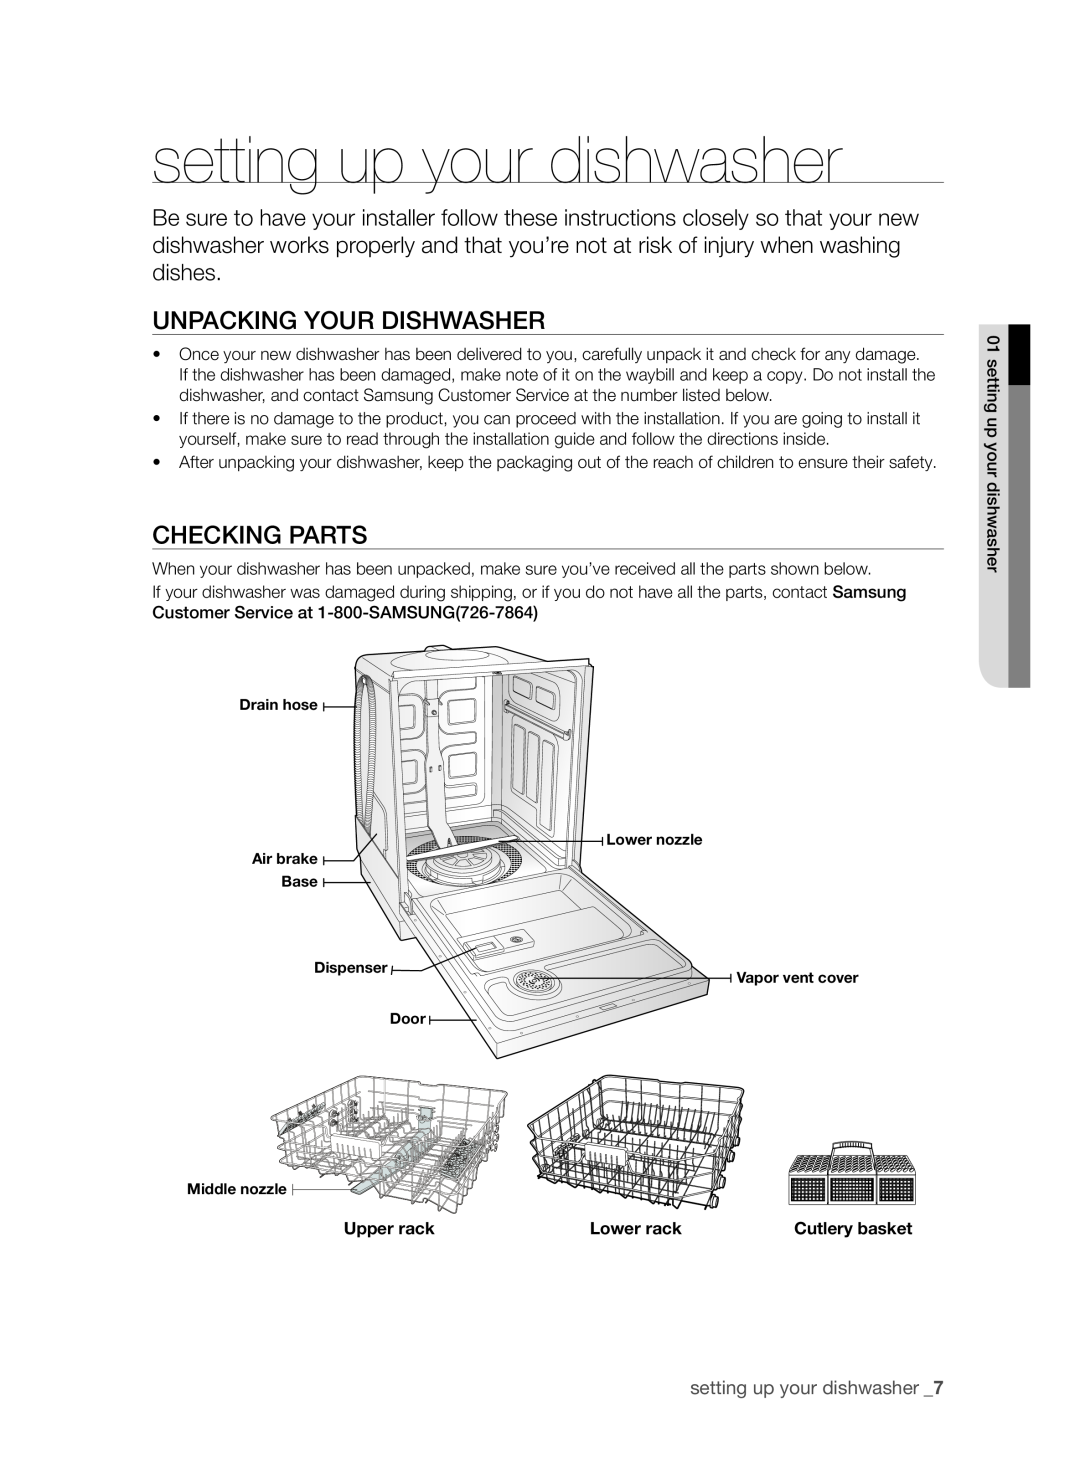 Samsung DMR57LHW Unpacking your dishwasher, Checking parts, setting up your dishwasher , Upper rack, Lower rack 